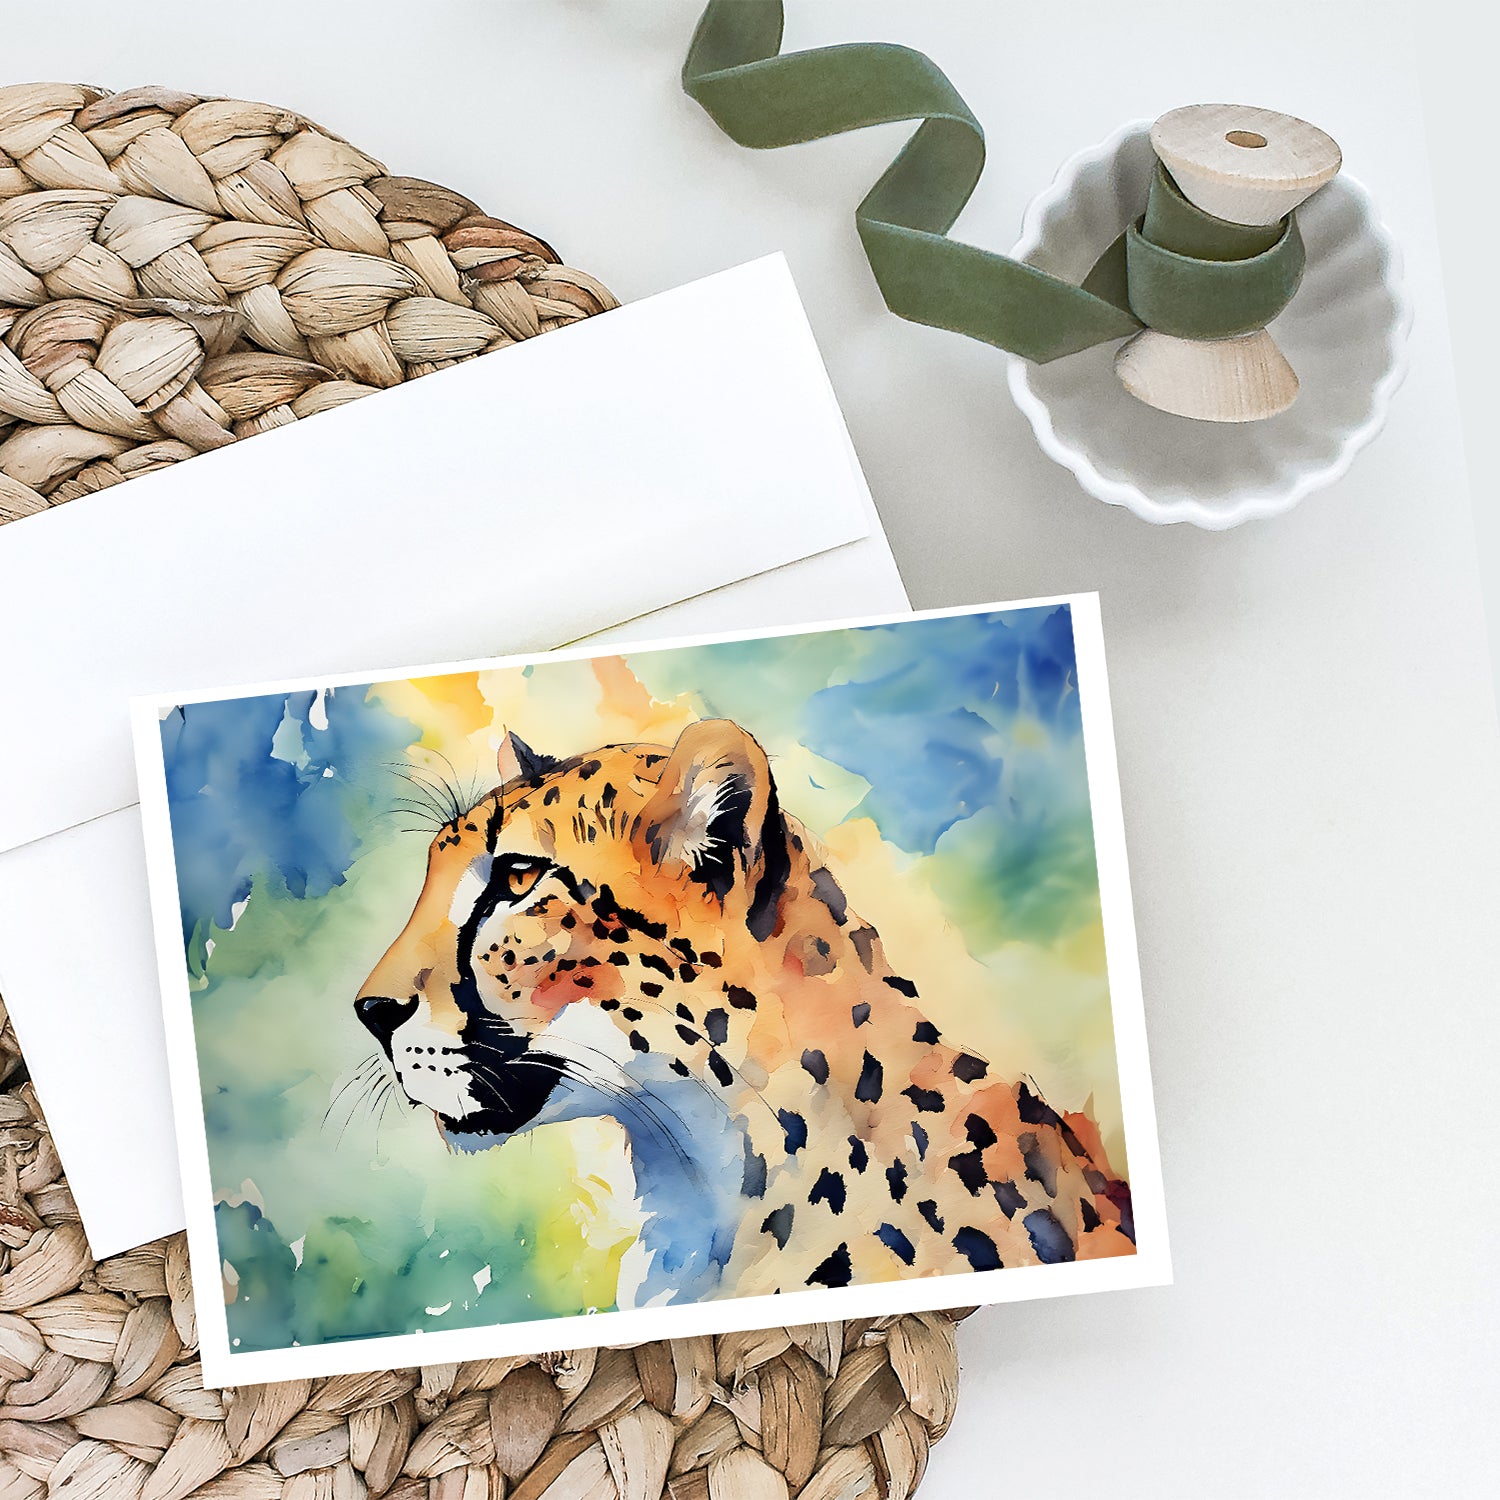 Cheetah Greeting Cards Pack of 8